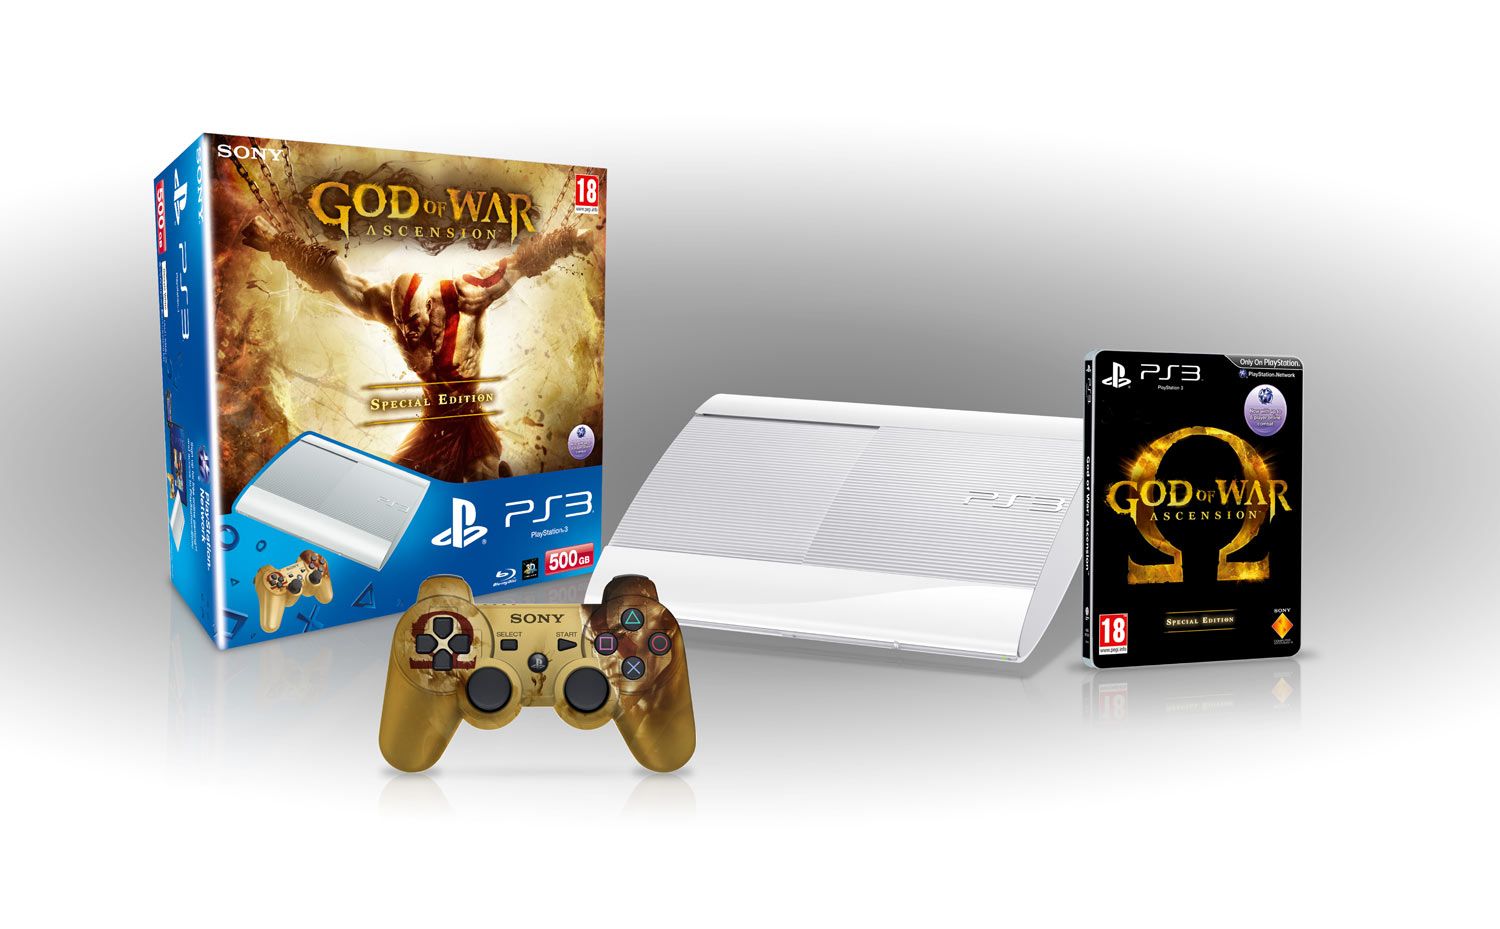 Correlaat Collega Verbinding verbroken God of War: Ascension PS3 bundle unveiled